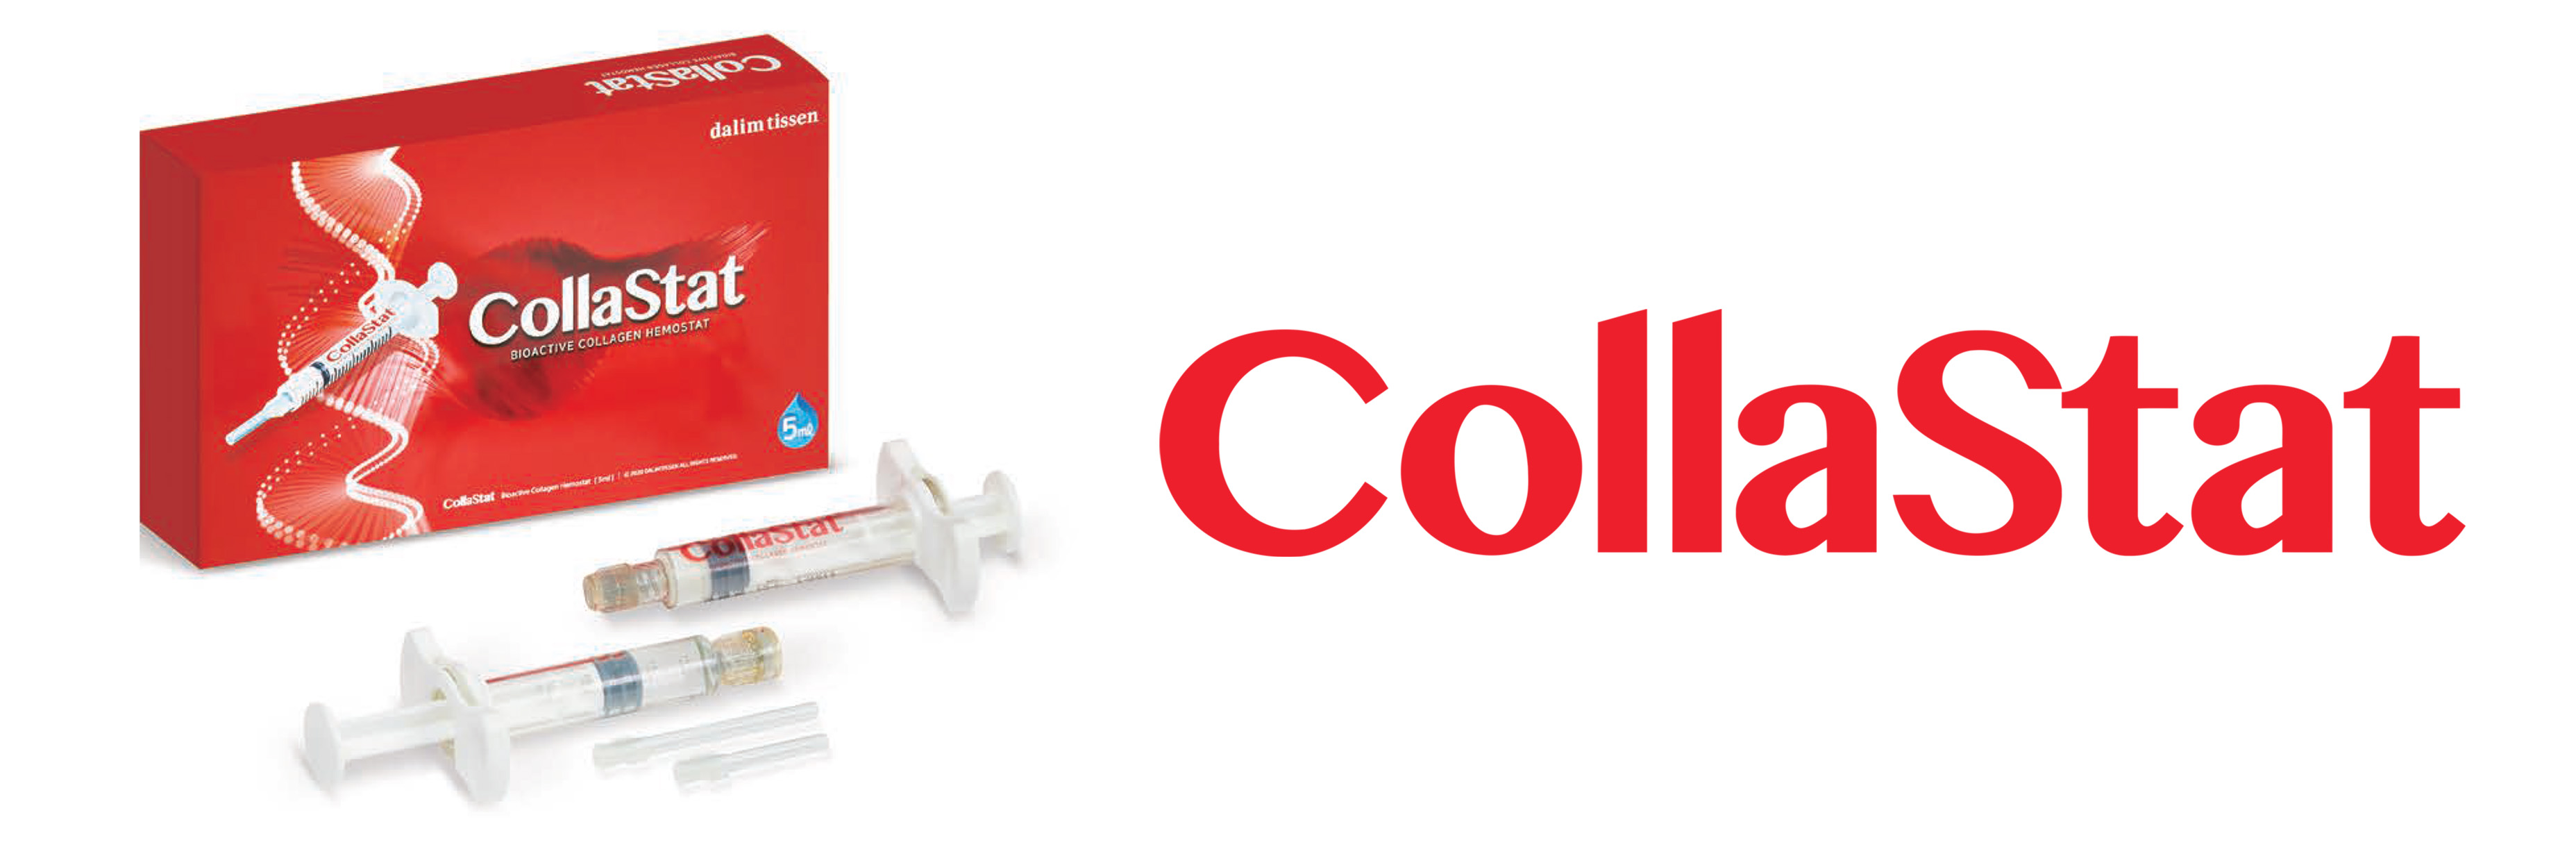 P15b Collastat logo pic